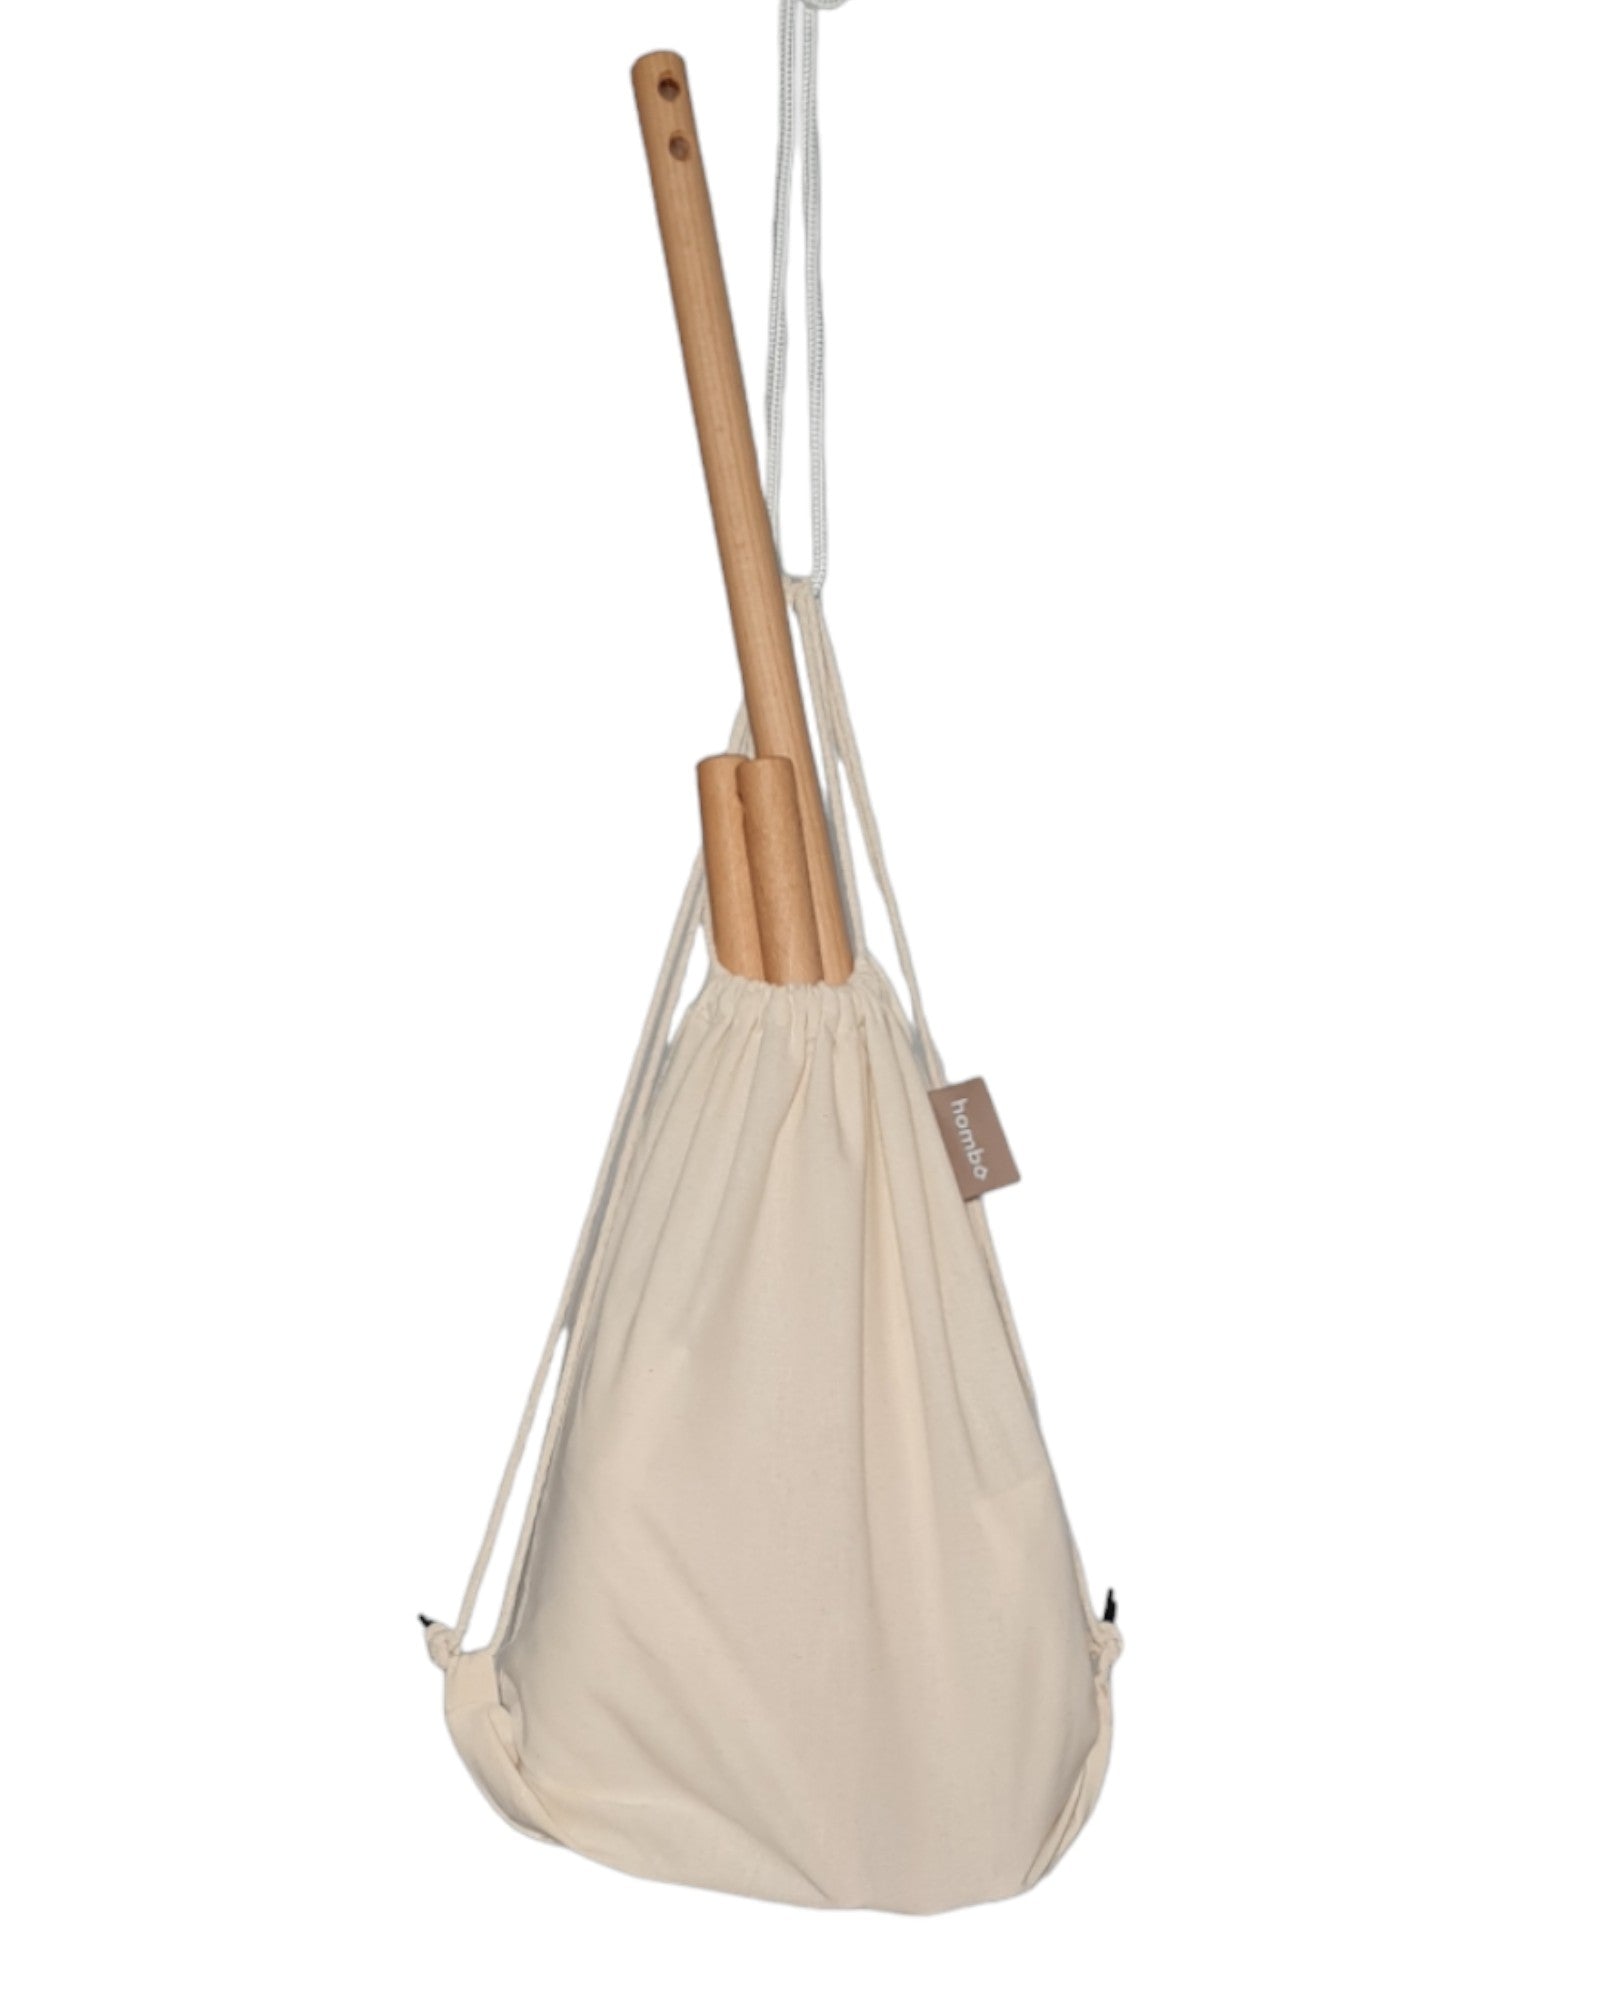 homba® zen mini hanging chair cotton grey (2-10years)